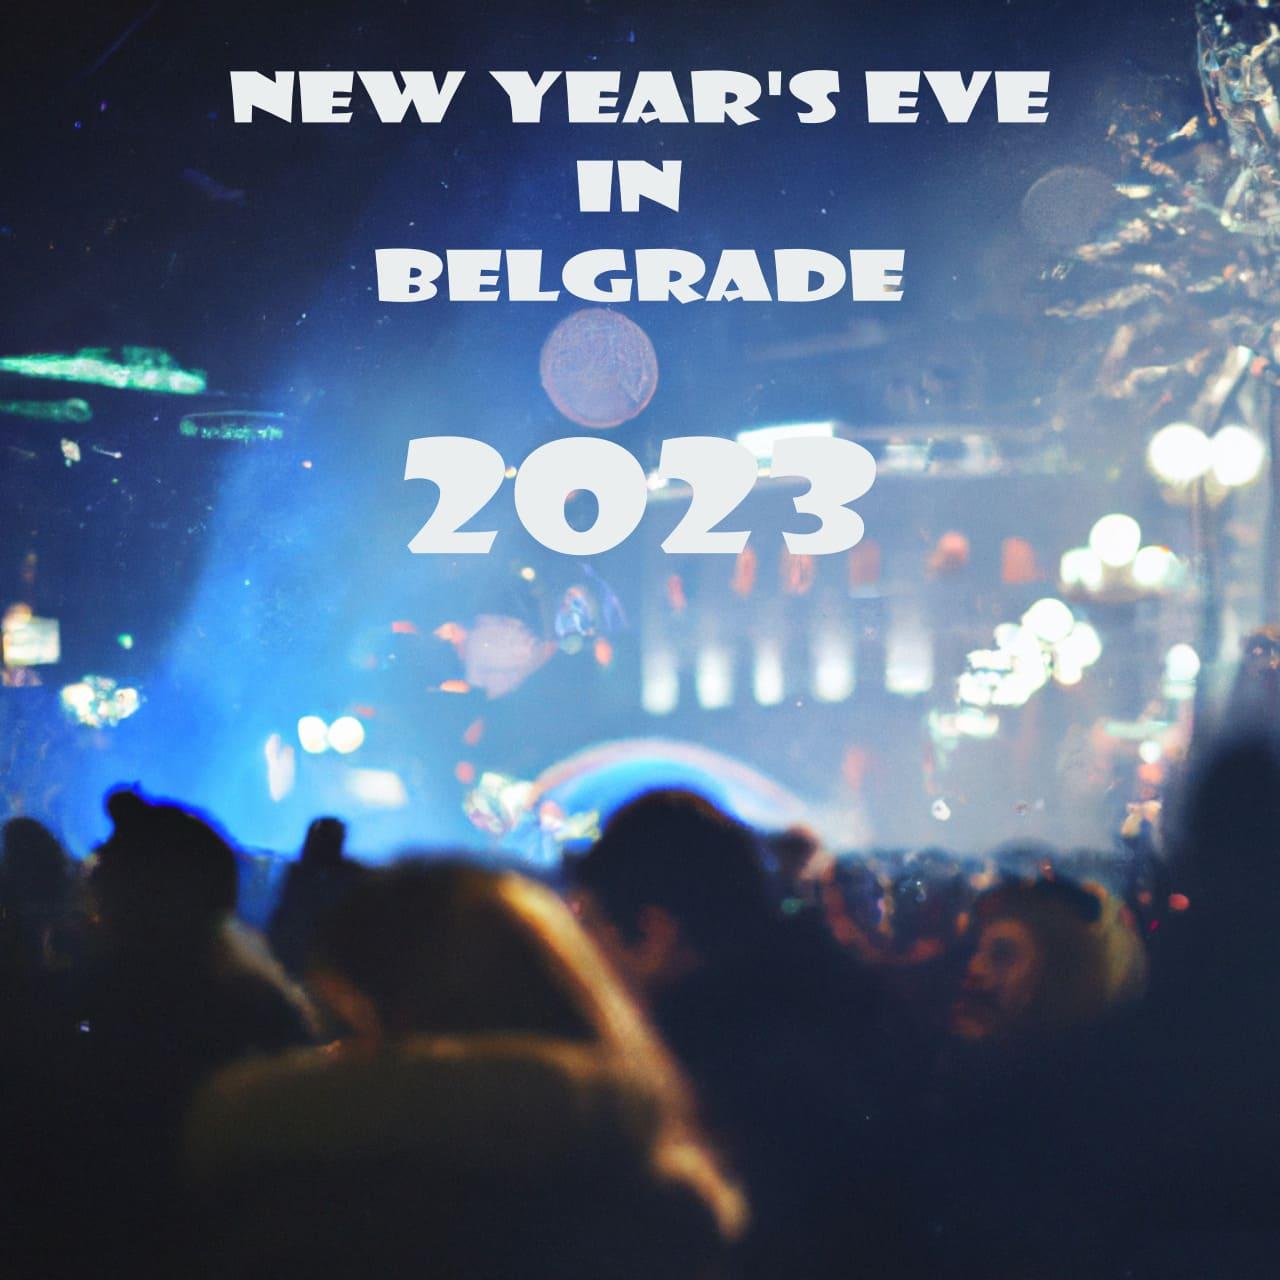 New Year's eve in Belgrade